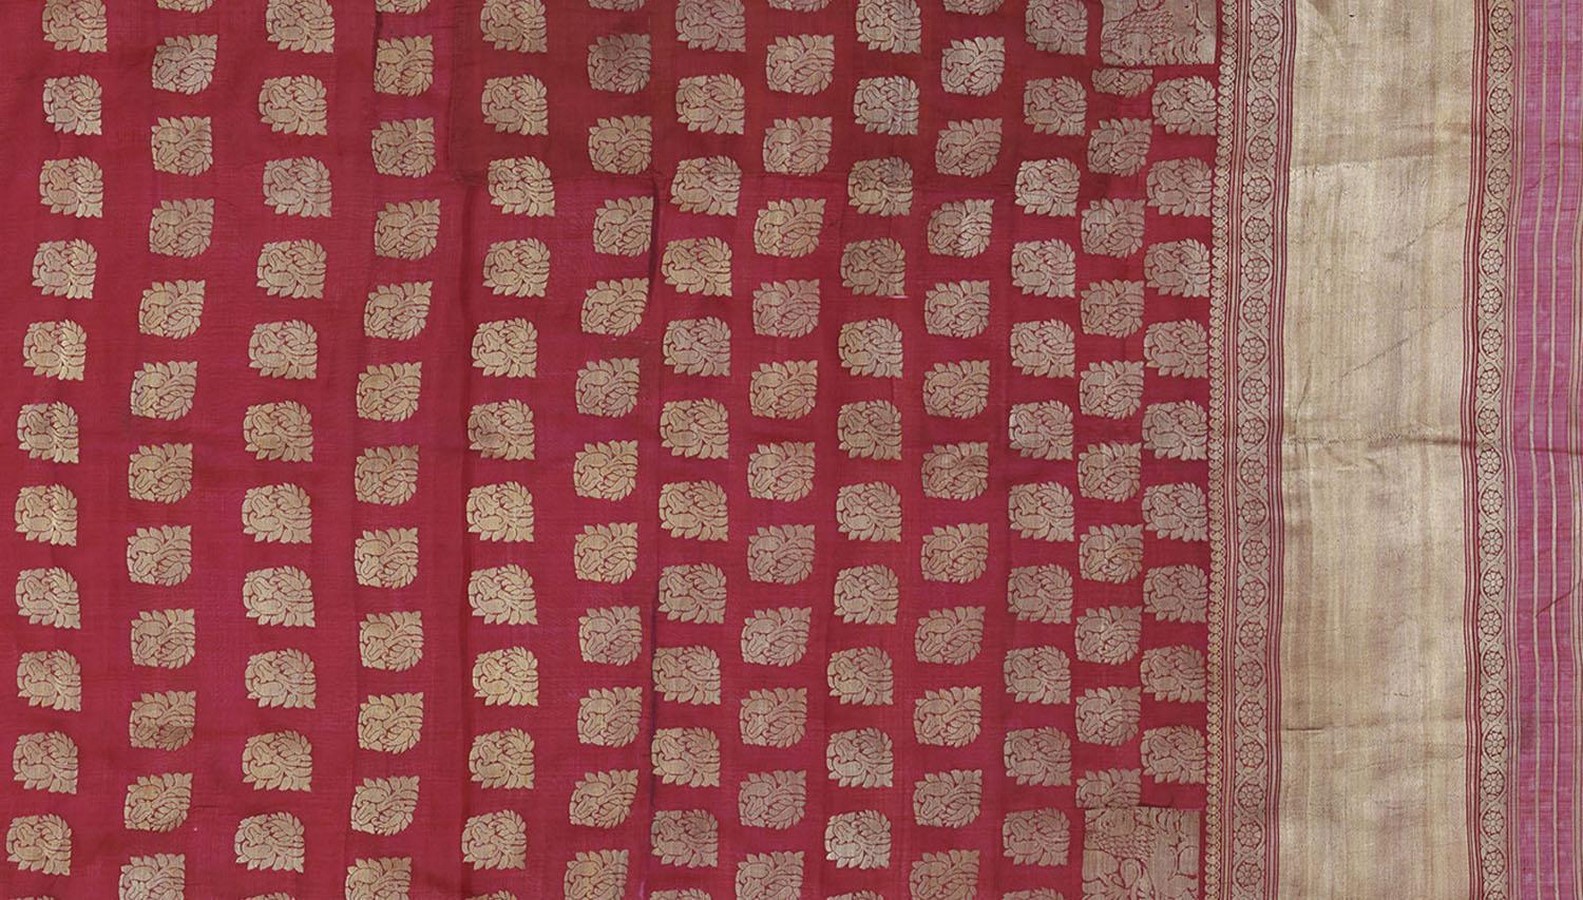 Inside the World of Textiles: Gujarat Textile Design - Sheet1